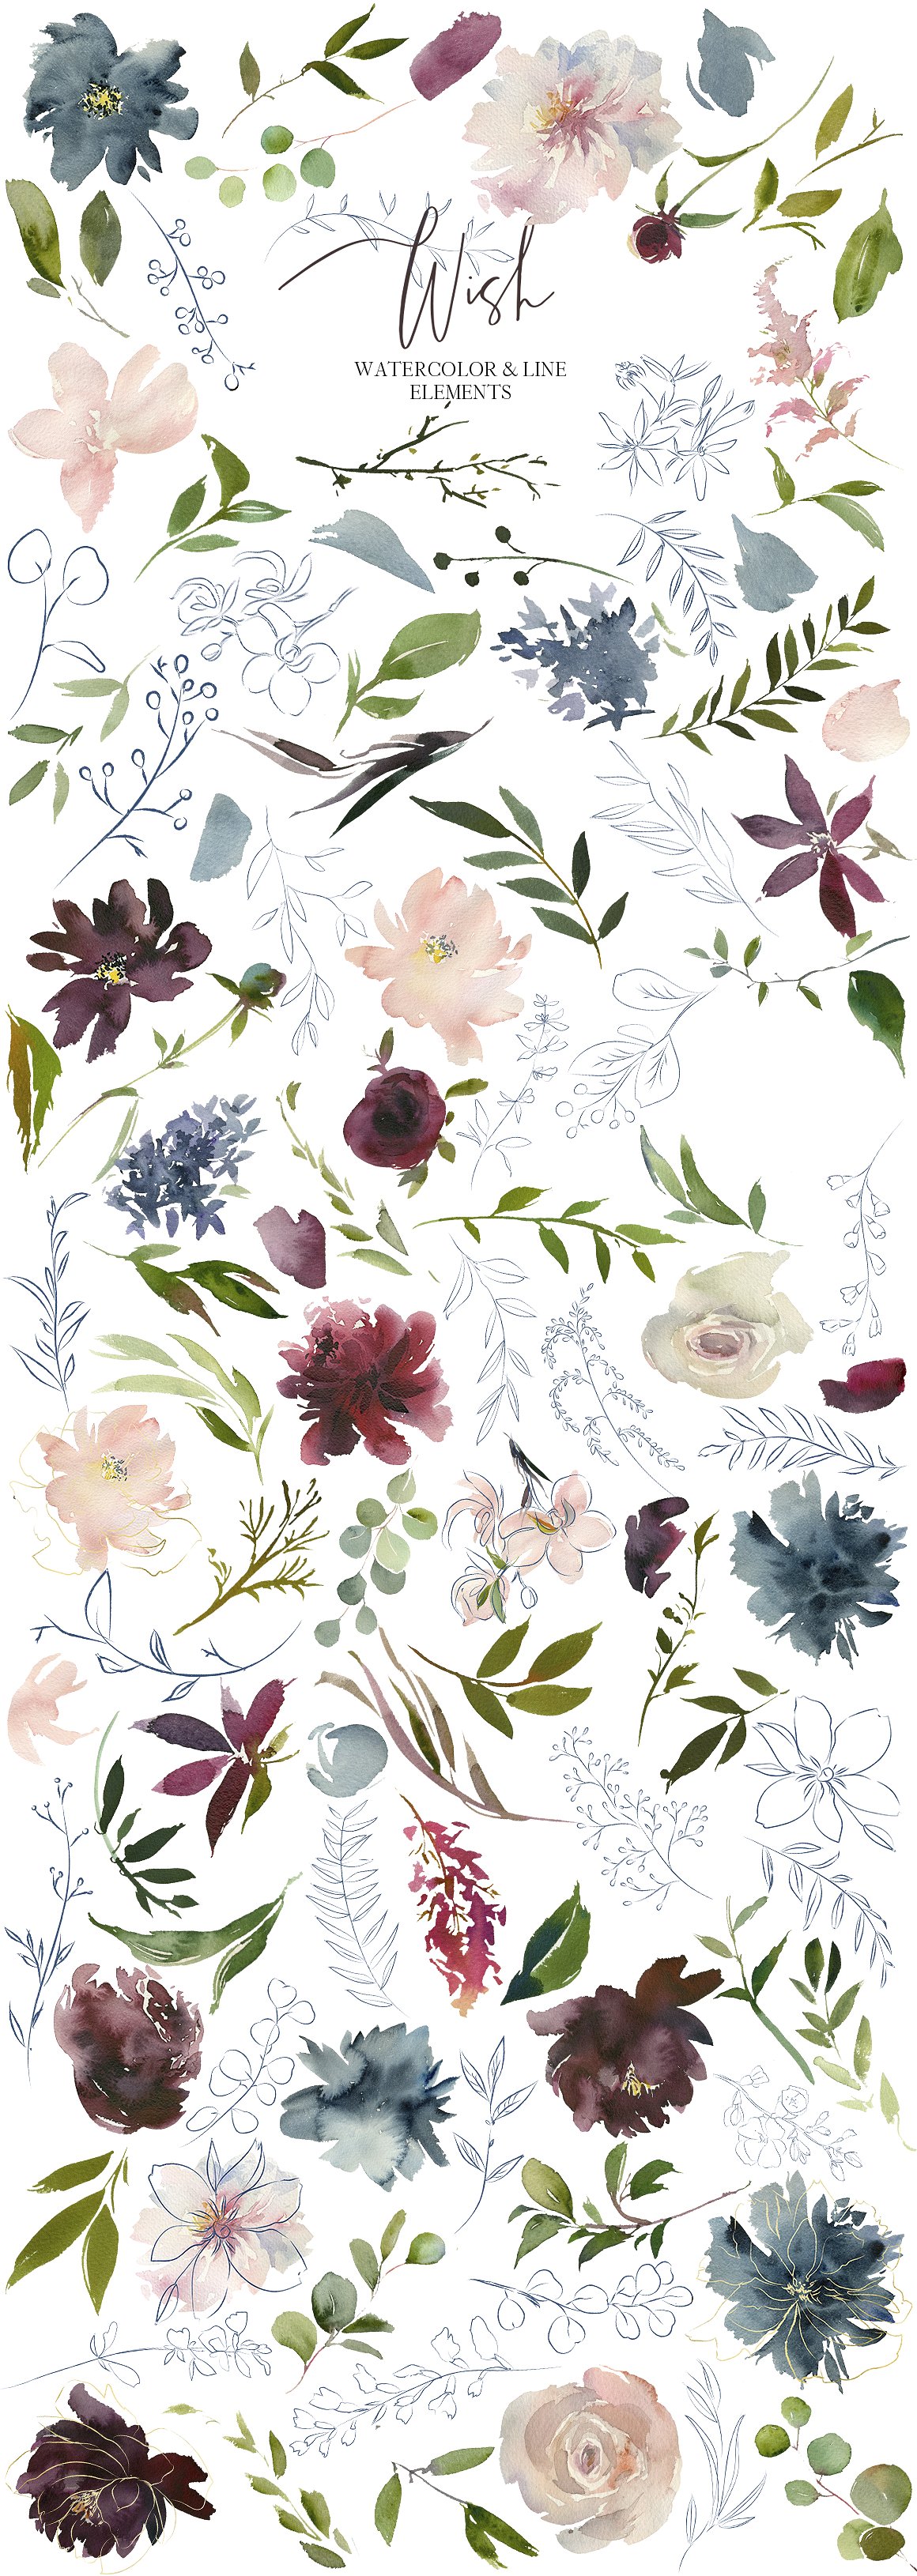 多彩优雅的花卉素材包 Wish Bordo Blue Watercolor Flowers插图4